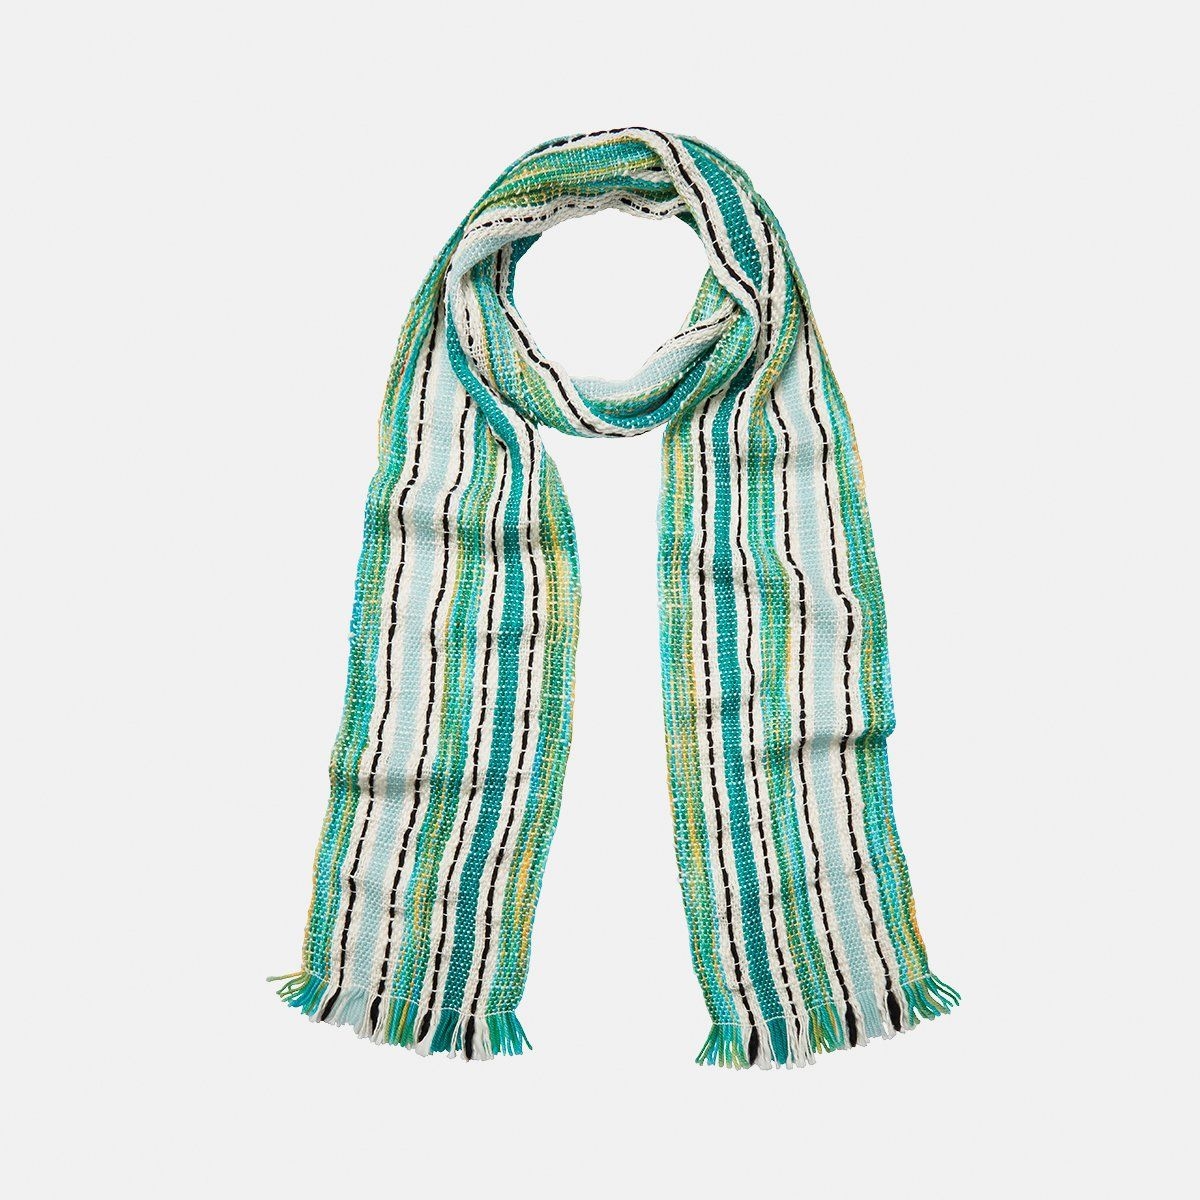 Canoa Scarf in Green / White – Luxury Marino Wool – Fairtrade & Sustainable – Aessai